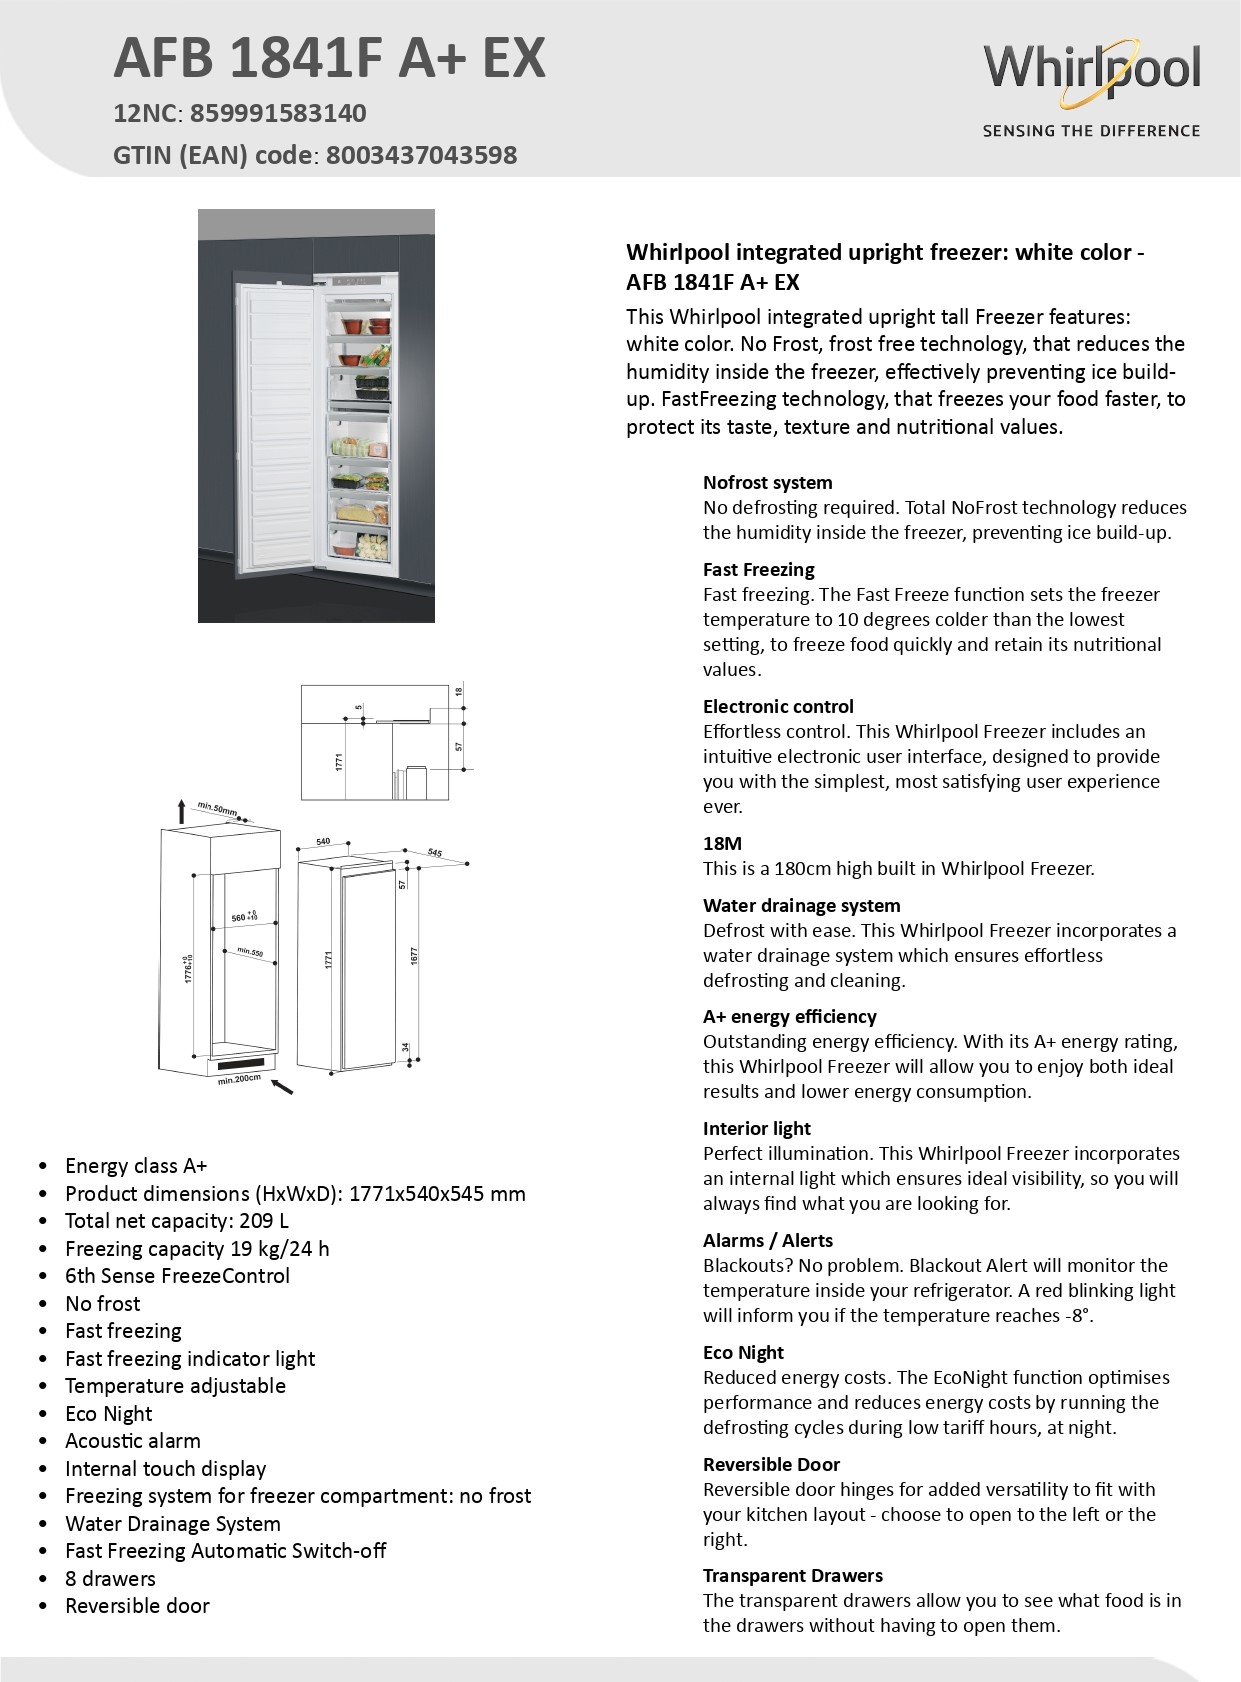 Whirlpool AFB 1841F A+ EX | Integrated Upright Freezer